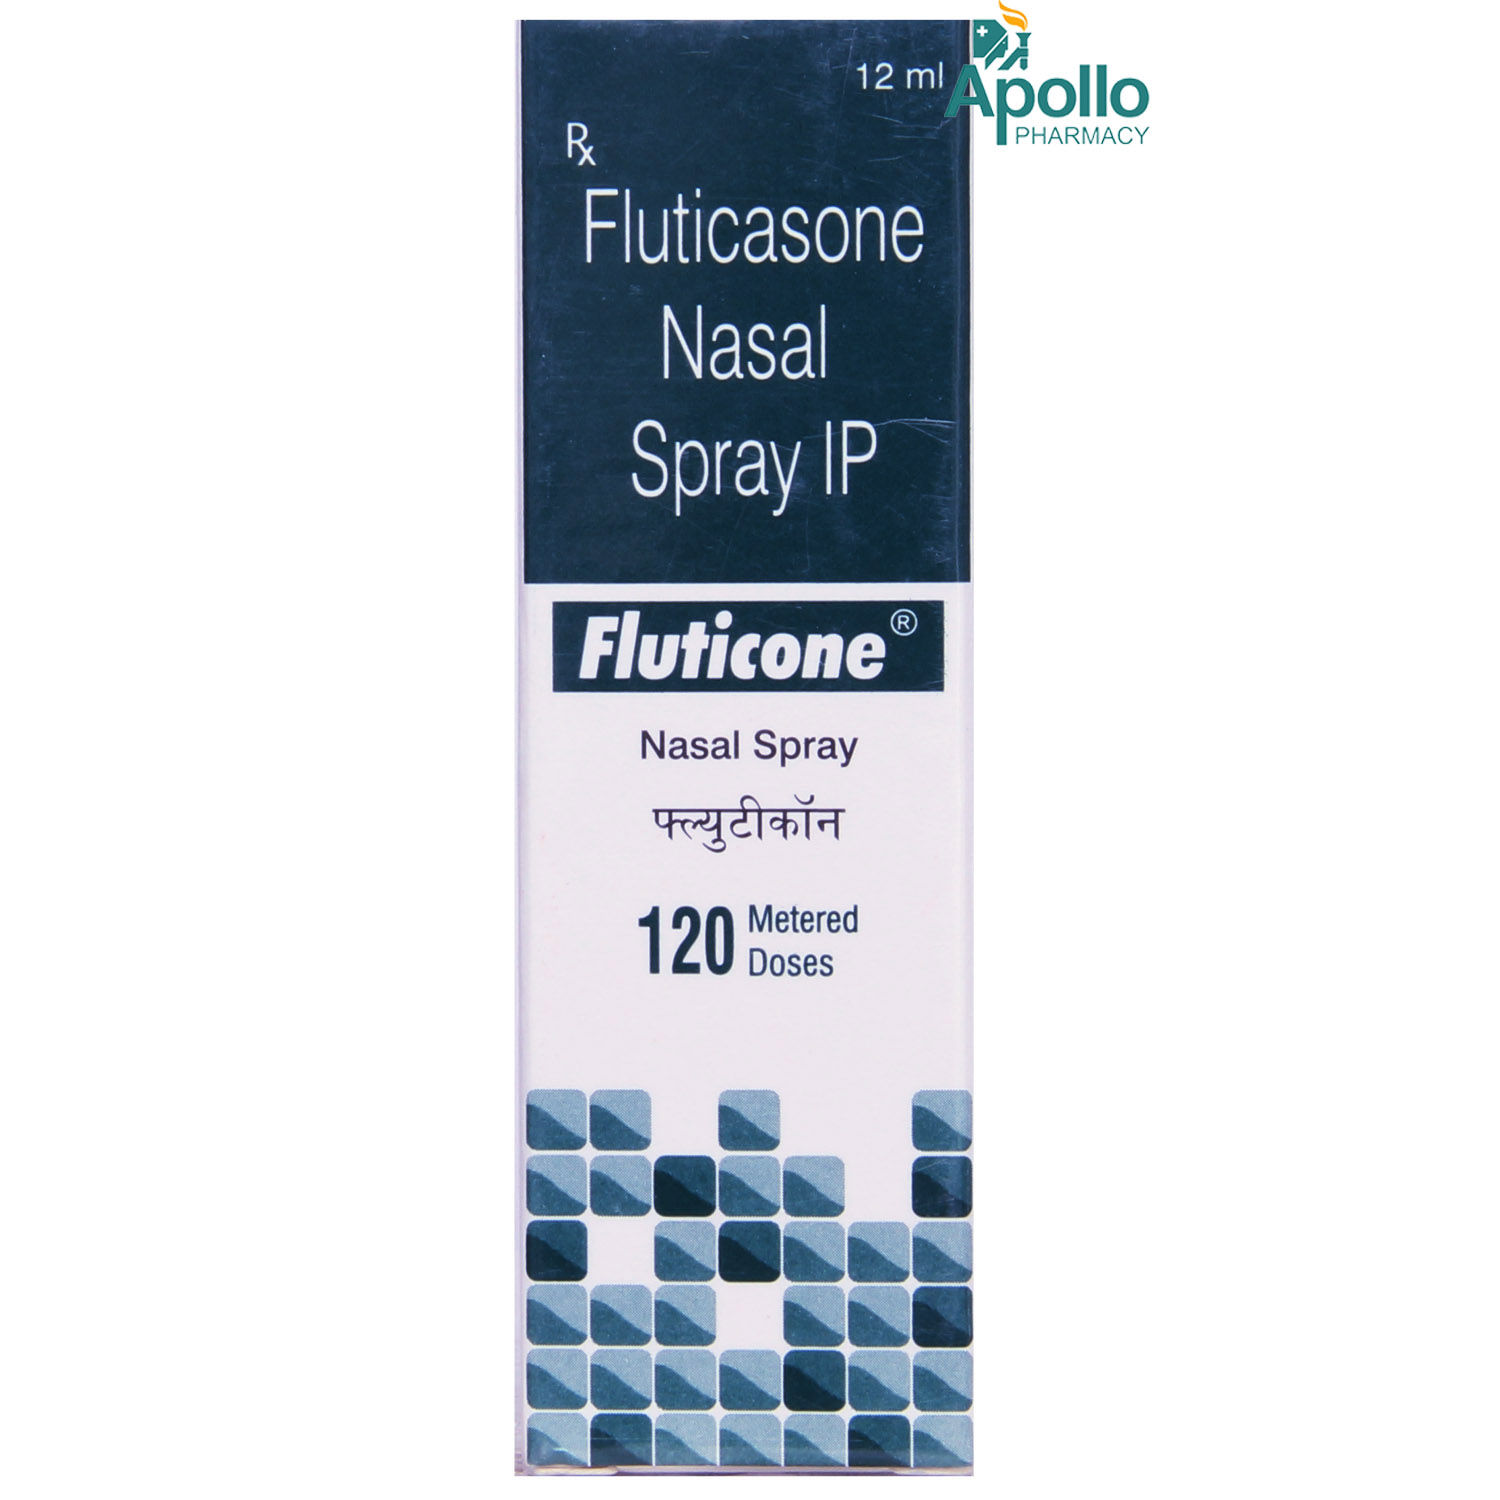 Buy Fluticone Nasal Spray 12 ml Online